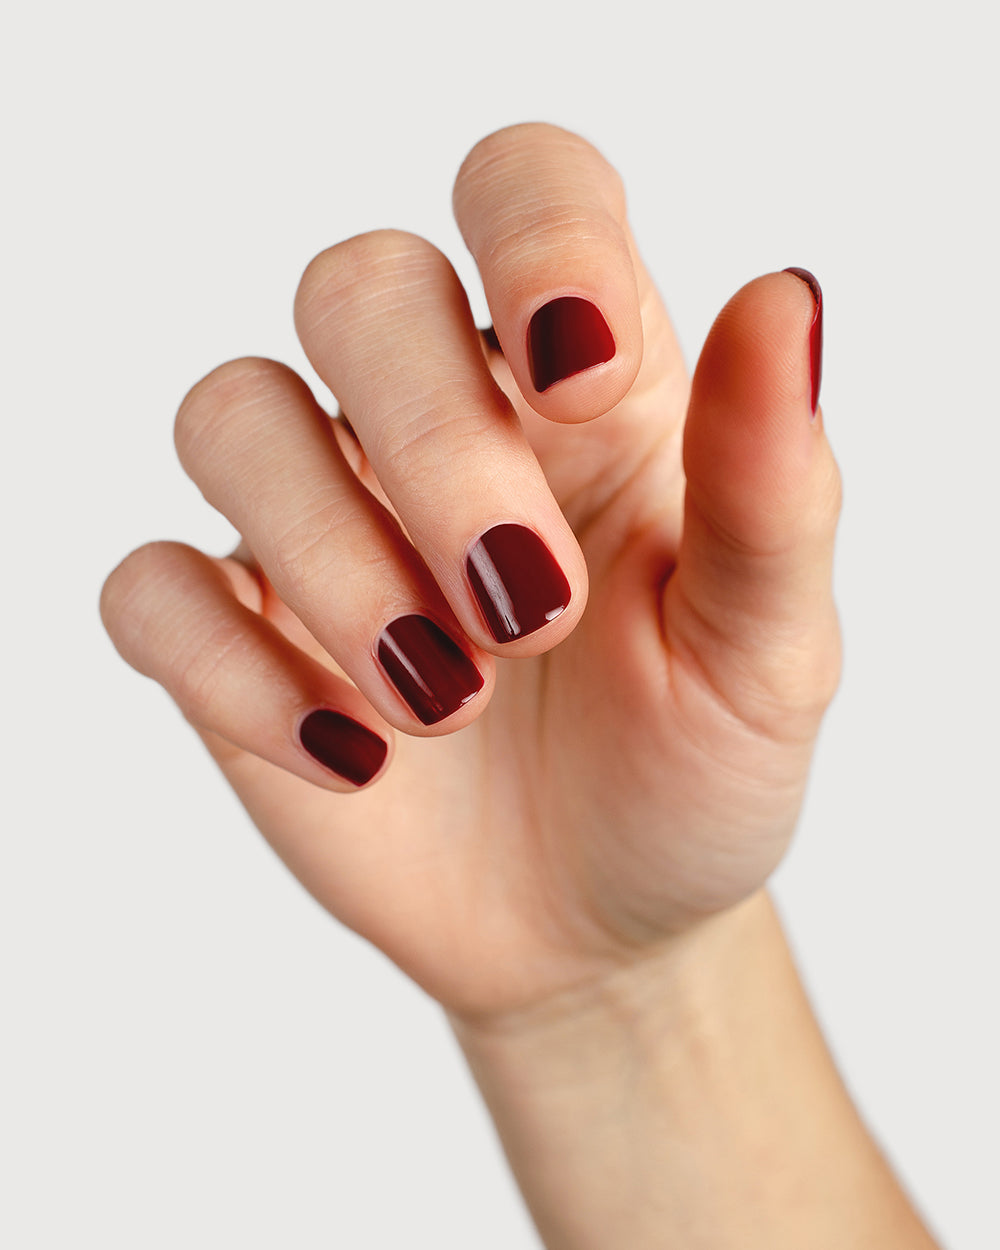 Organic mid-tone red nail polish hand swatch on fair skin tone